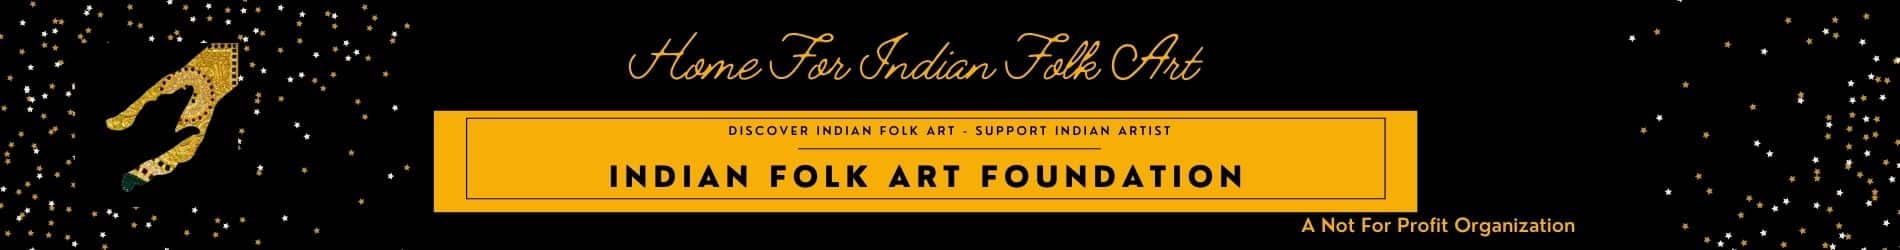 Indian Folk Art Foundation (International Indian Folk Art Gallery)